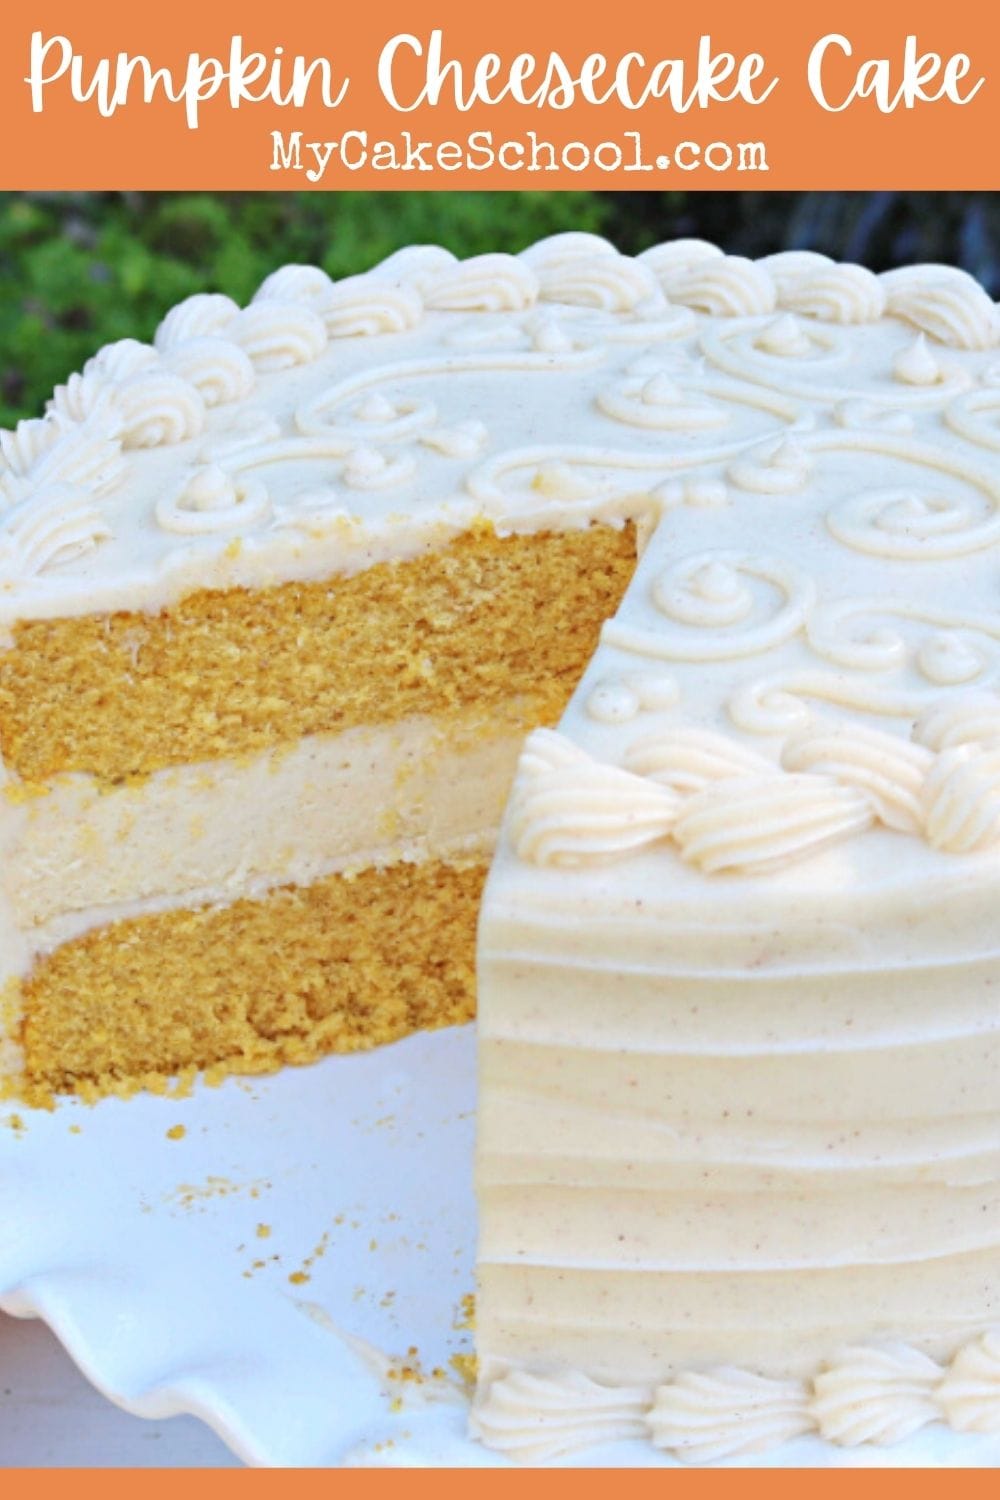 Pumpkin Cheesecake Cake- So moist and flavorful!